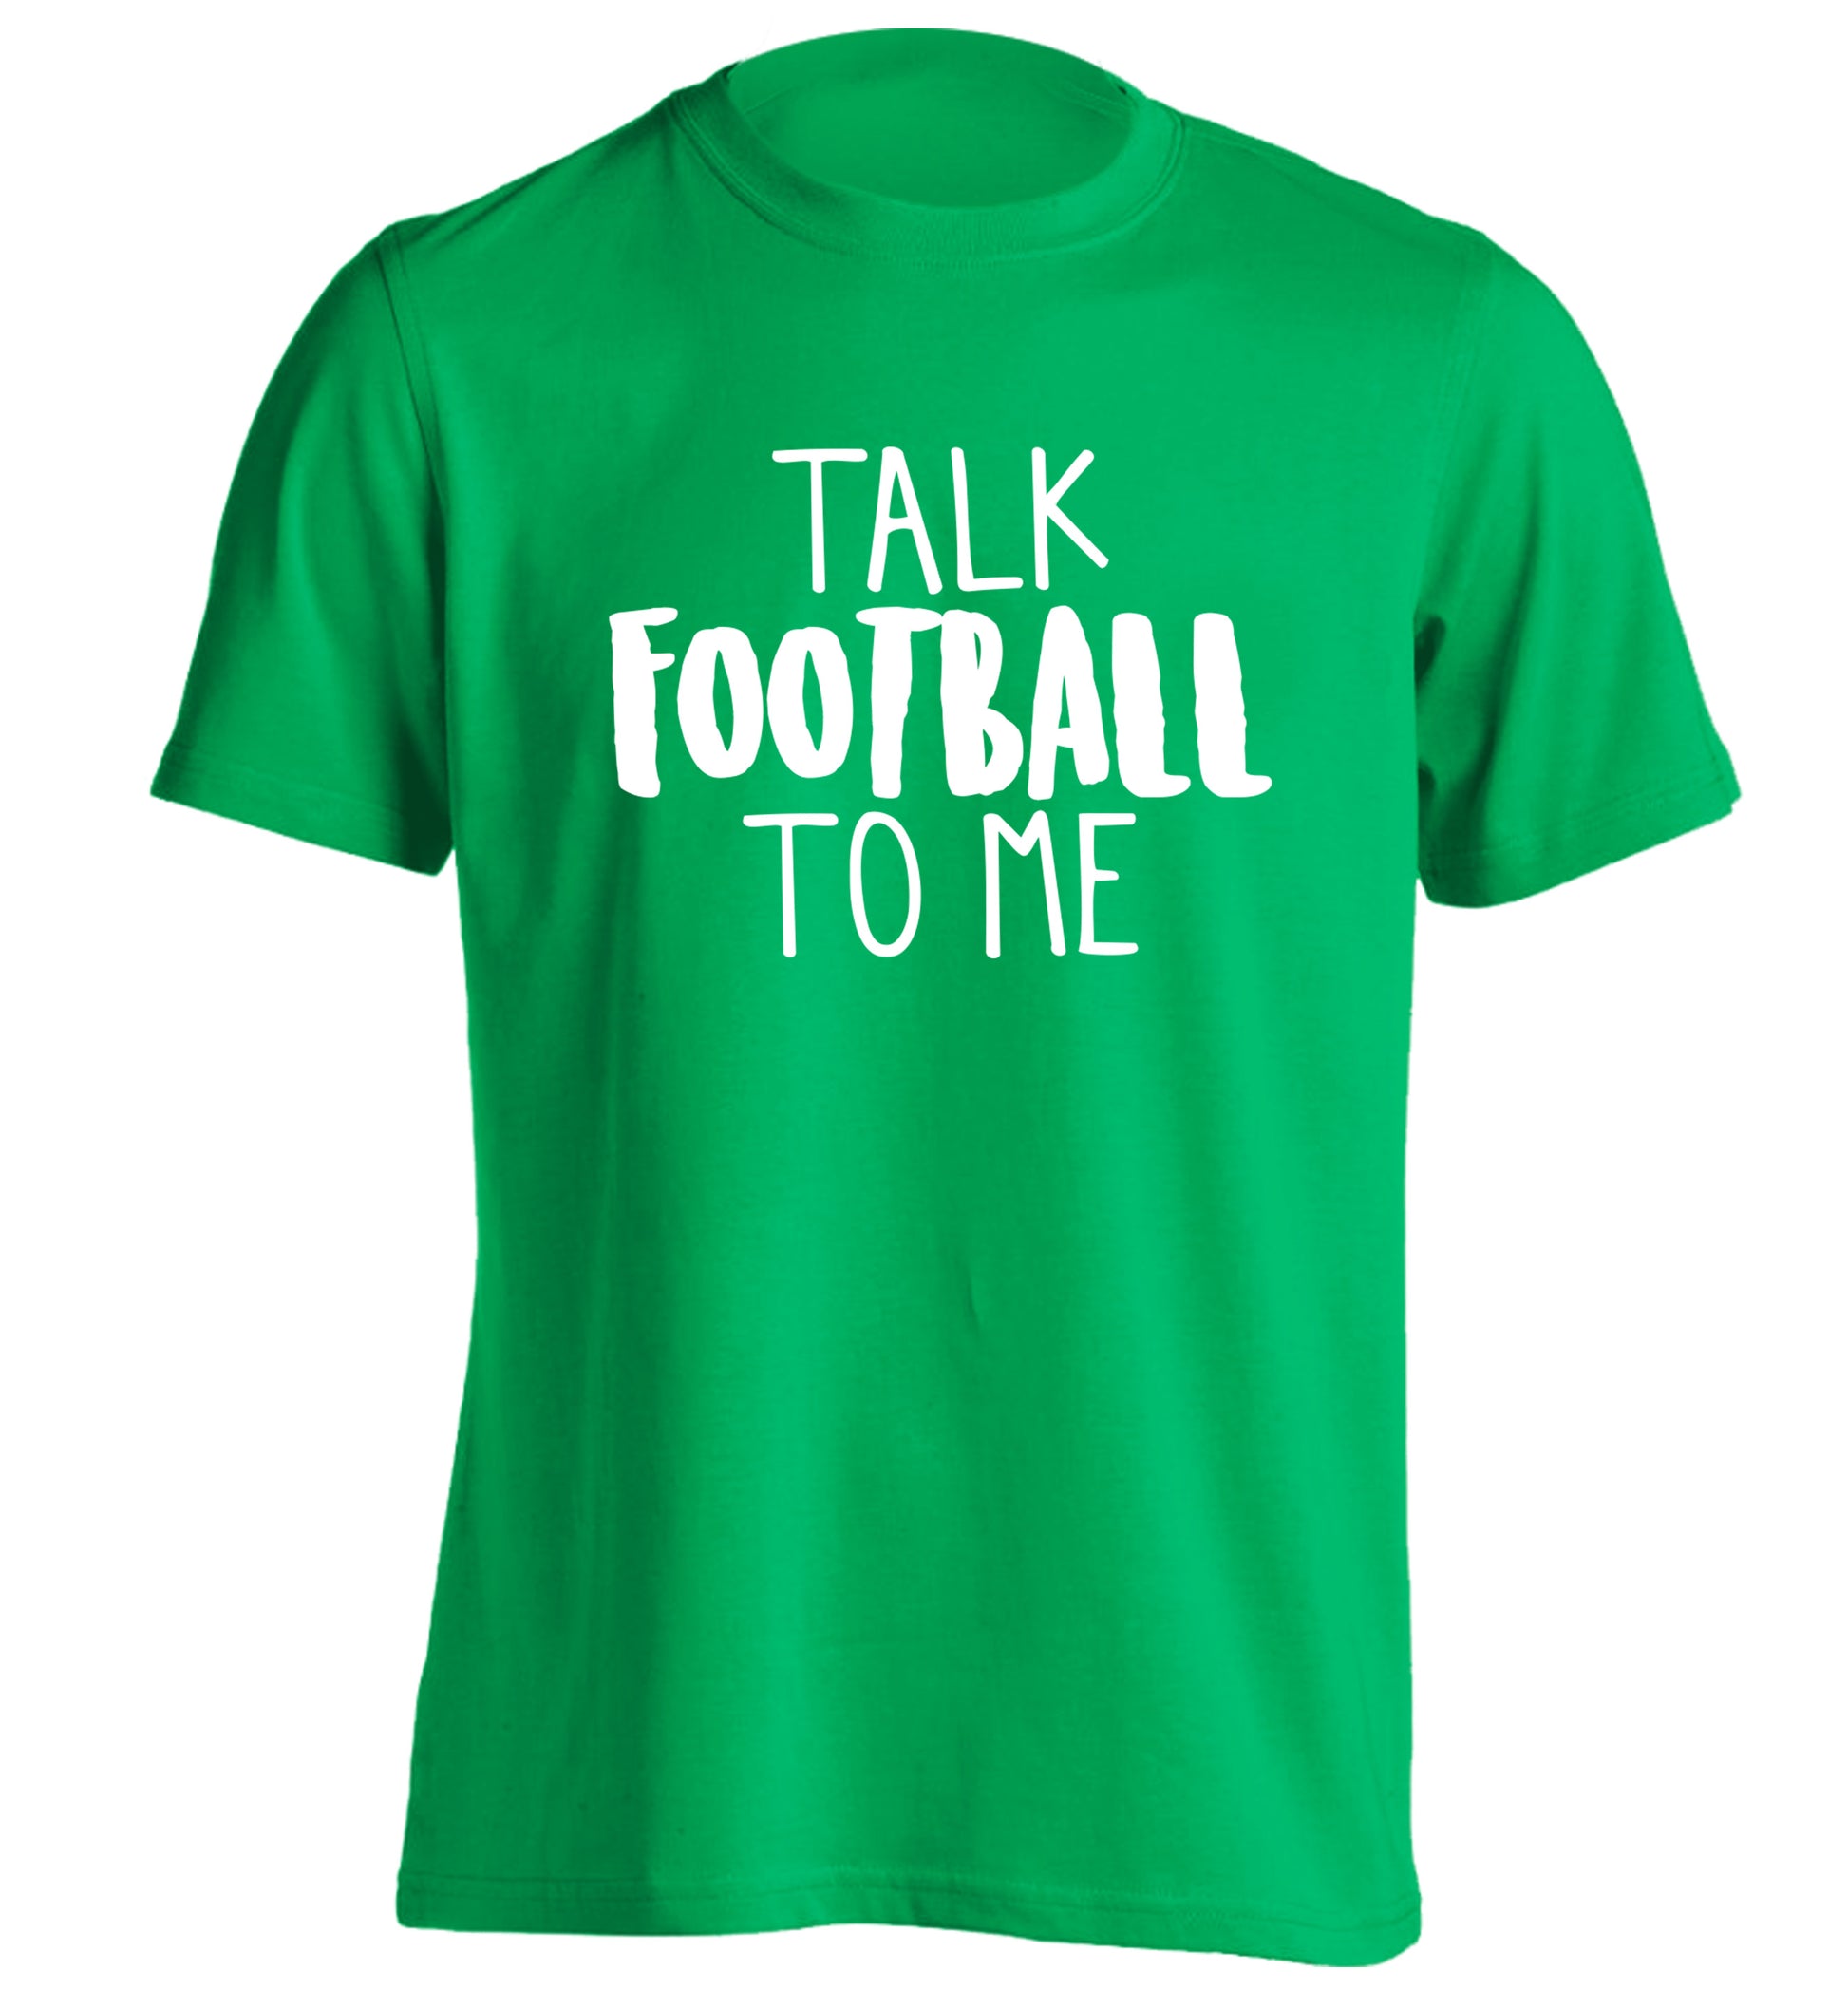 Talk football to me adults unisexgreen Tshirt 2XL